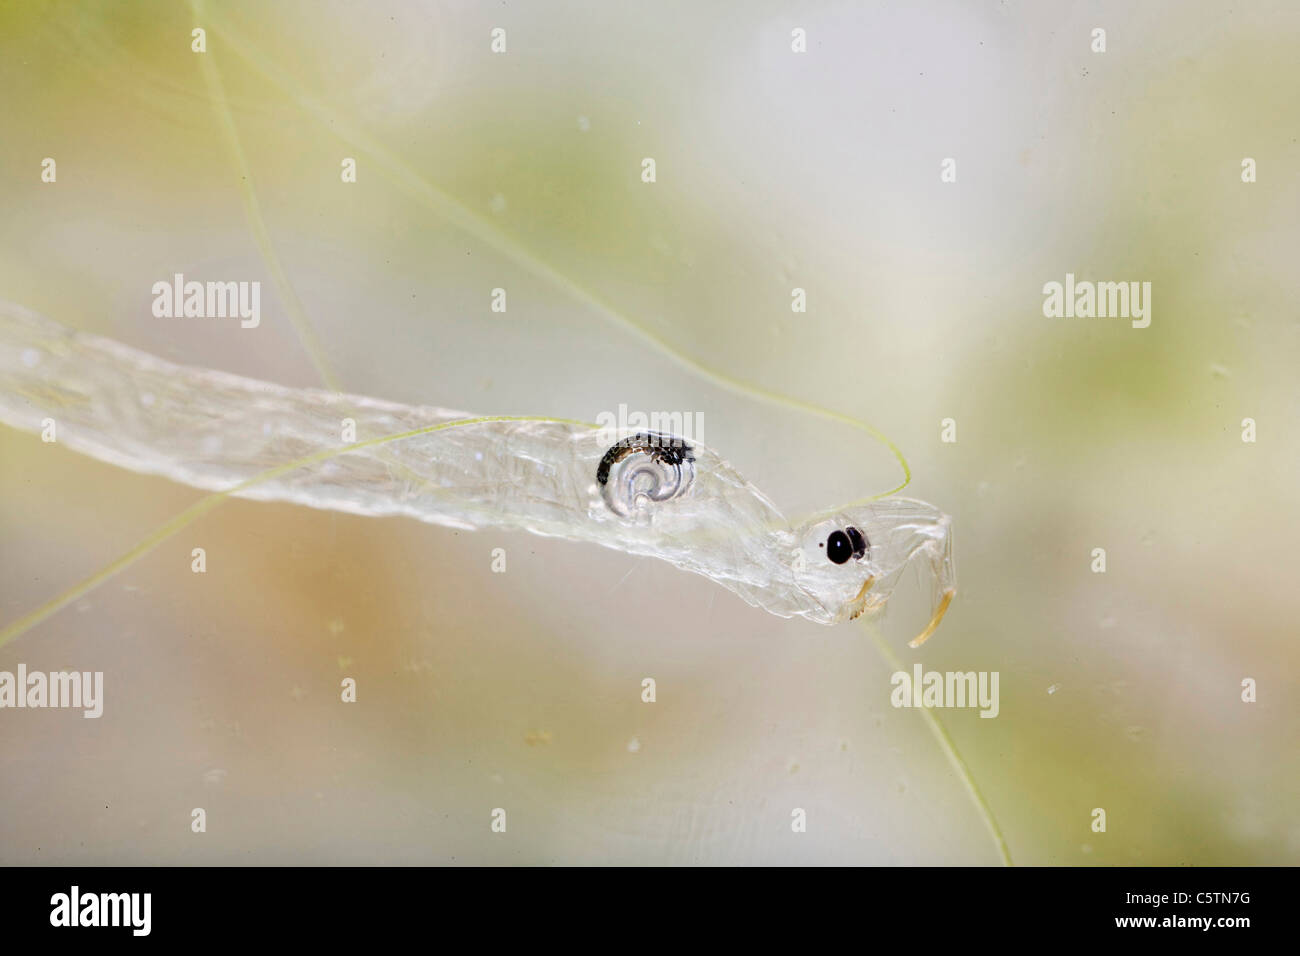 Germany, Bavaria, Larva of Phantom midge, close up Stock Photo